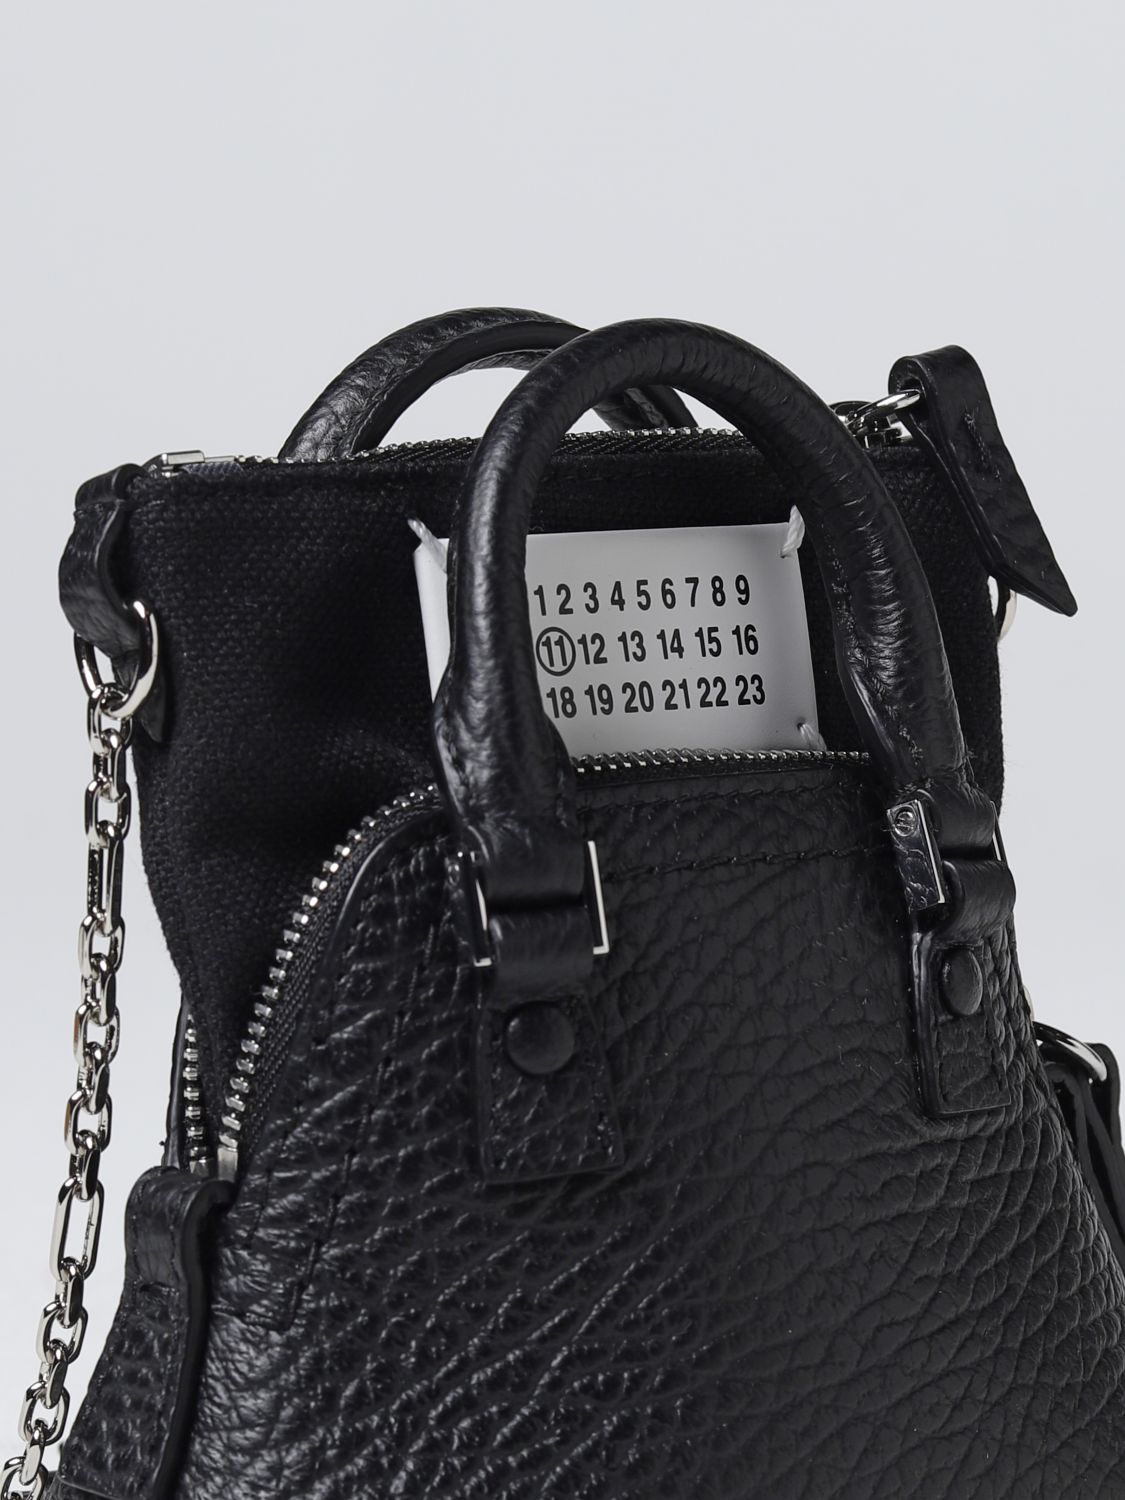 MAISON MARGIELA: handbag for woman - Black | Maison Margiela handbag ...